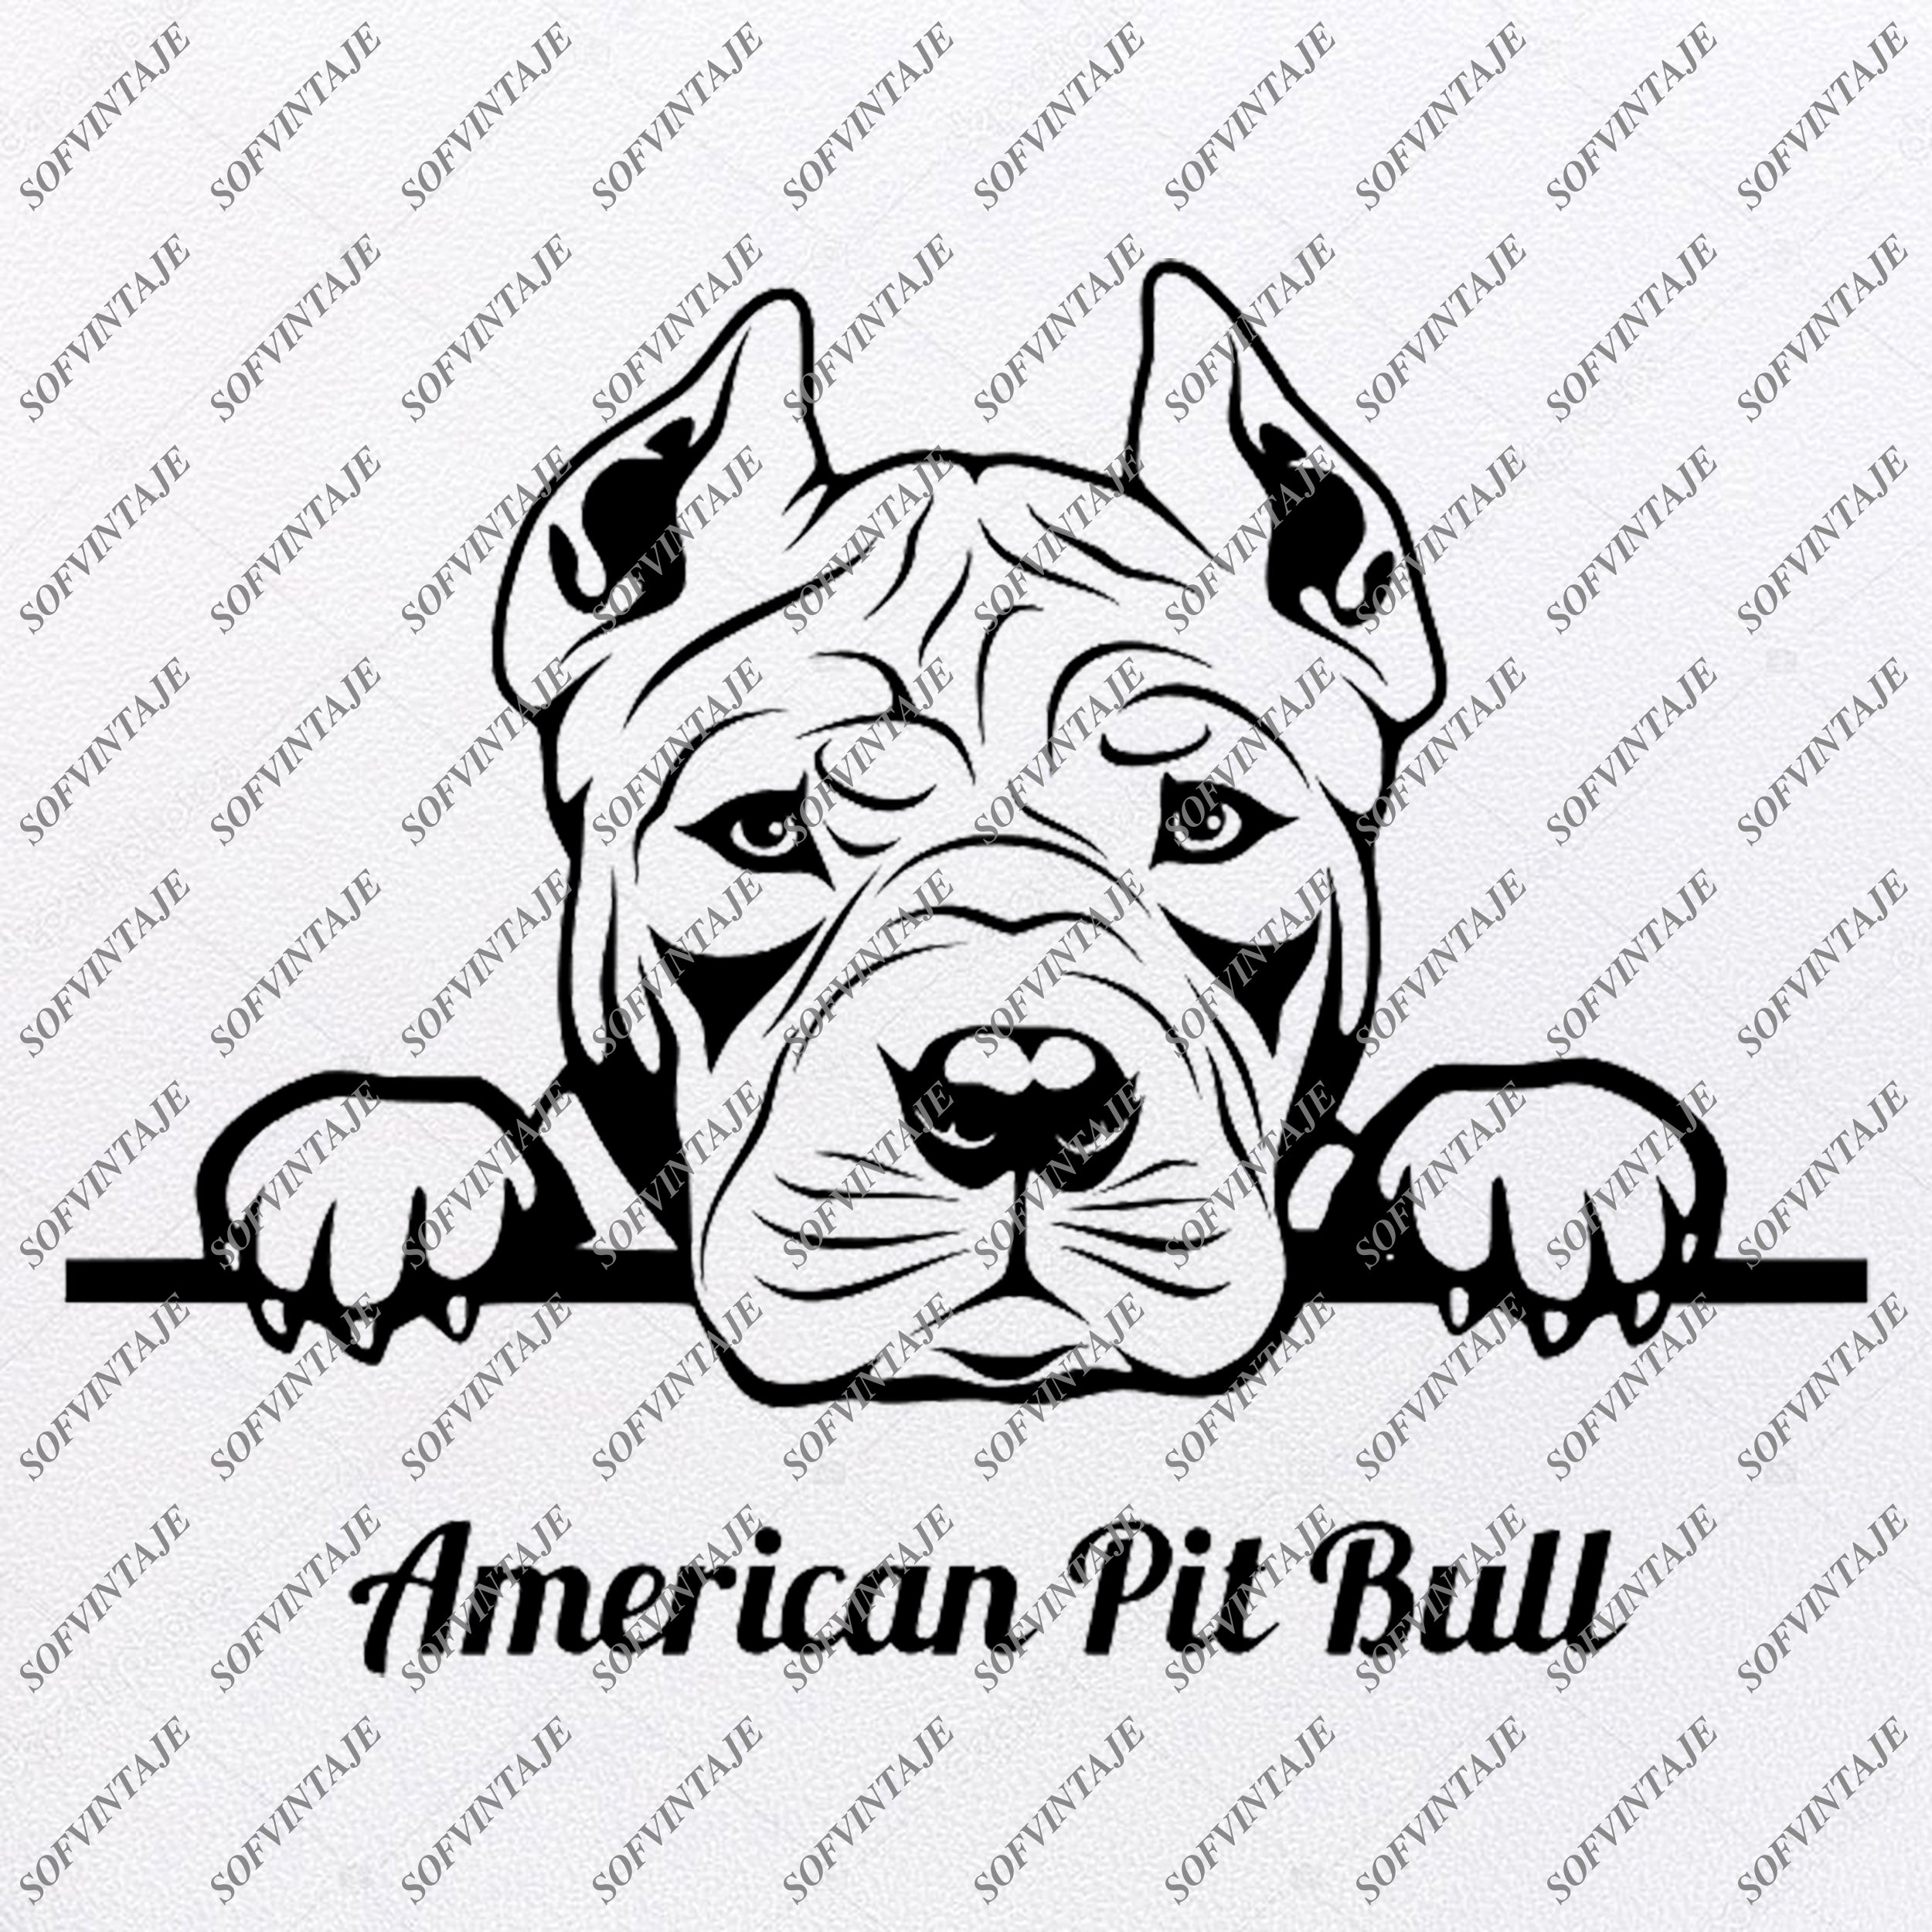 ai American Pit Bull Word Art SVG pdf Jpg Scan n Cut DOG Svg Cut file